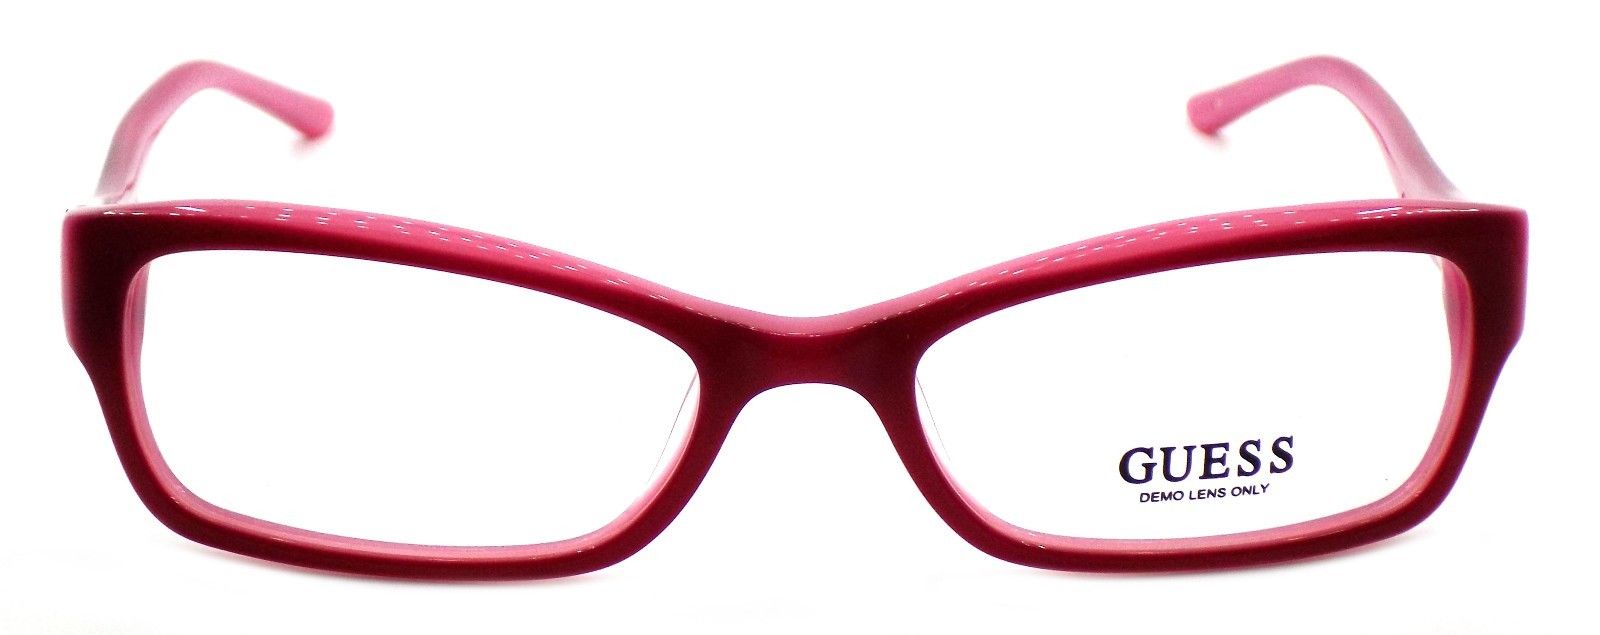 2-GUESS GU2261 BU Women's Eyeglasses Frames PETITE 51-17-130 Burgundy + CASE-715583407046-IKSpecs